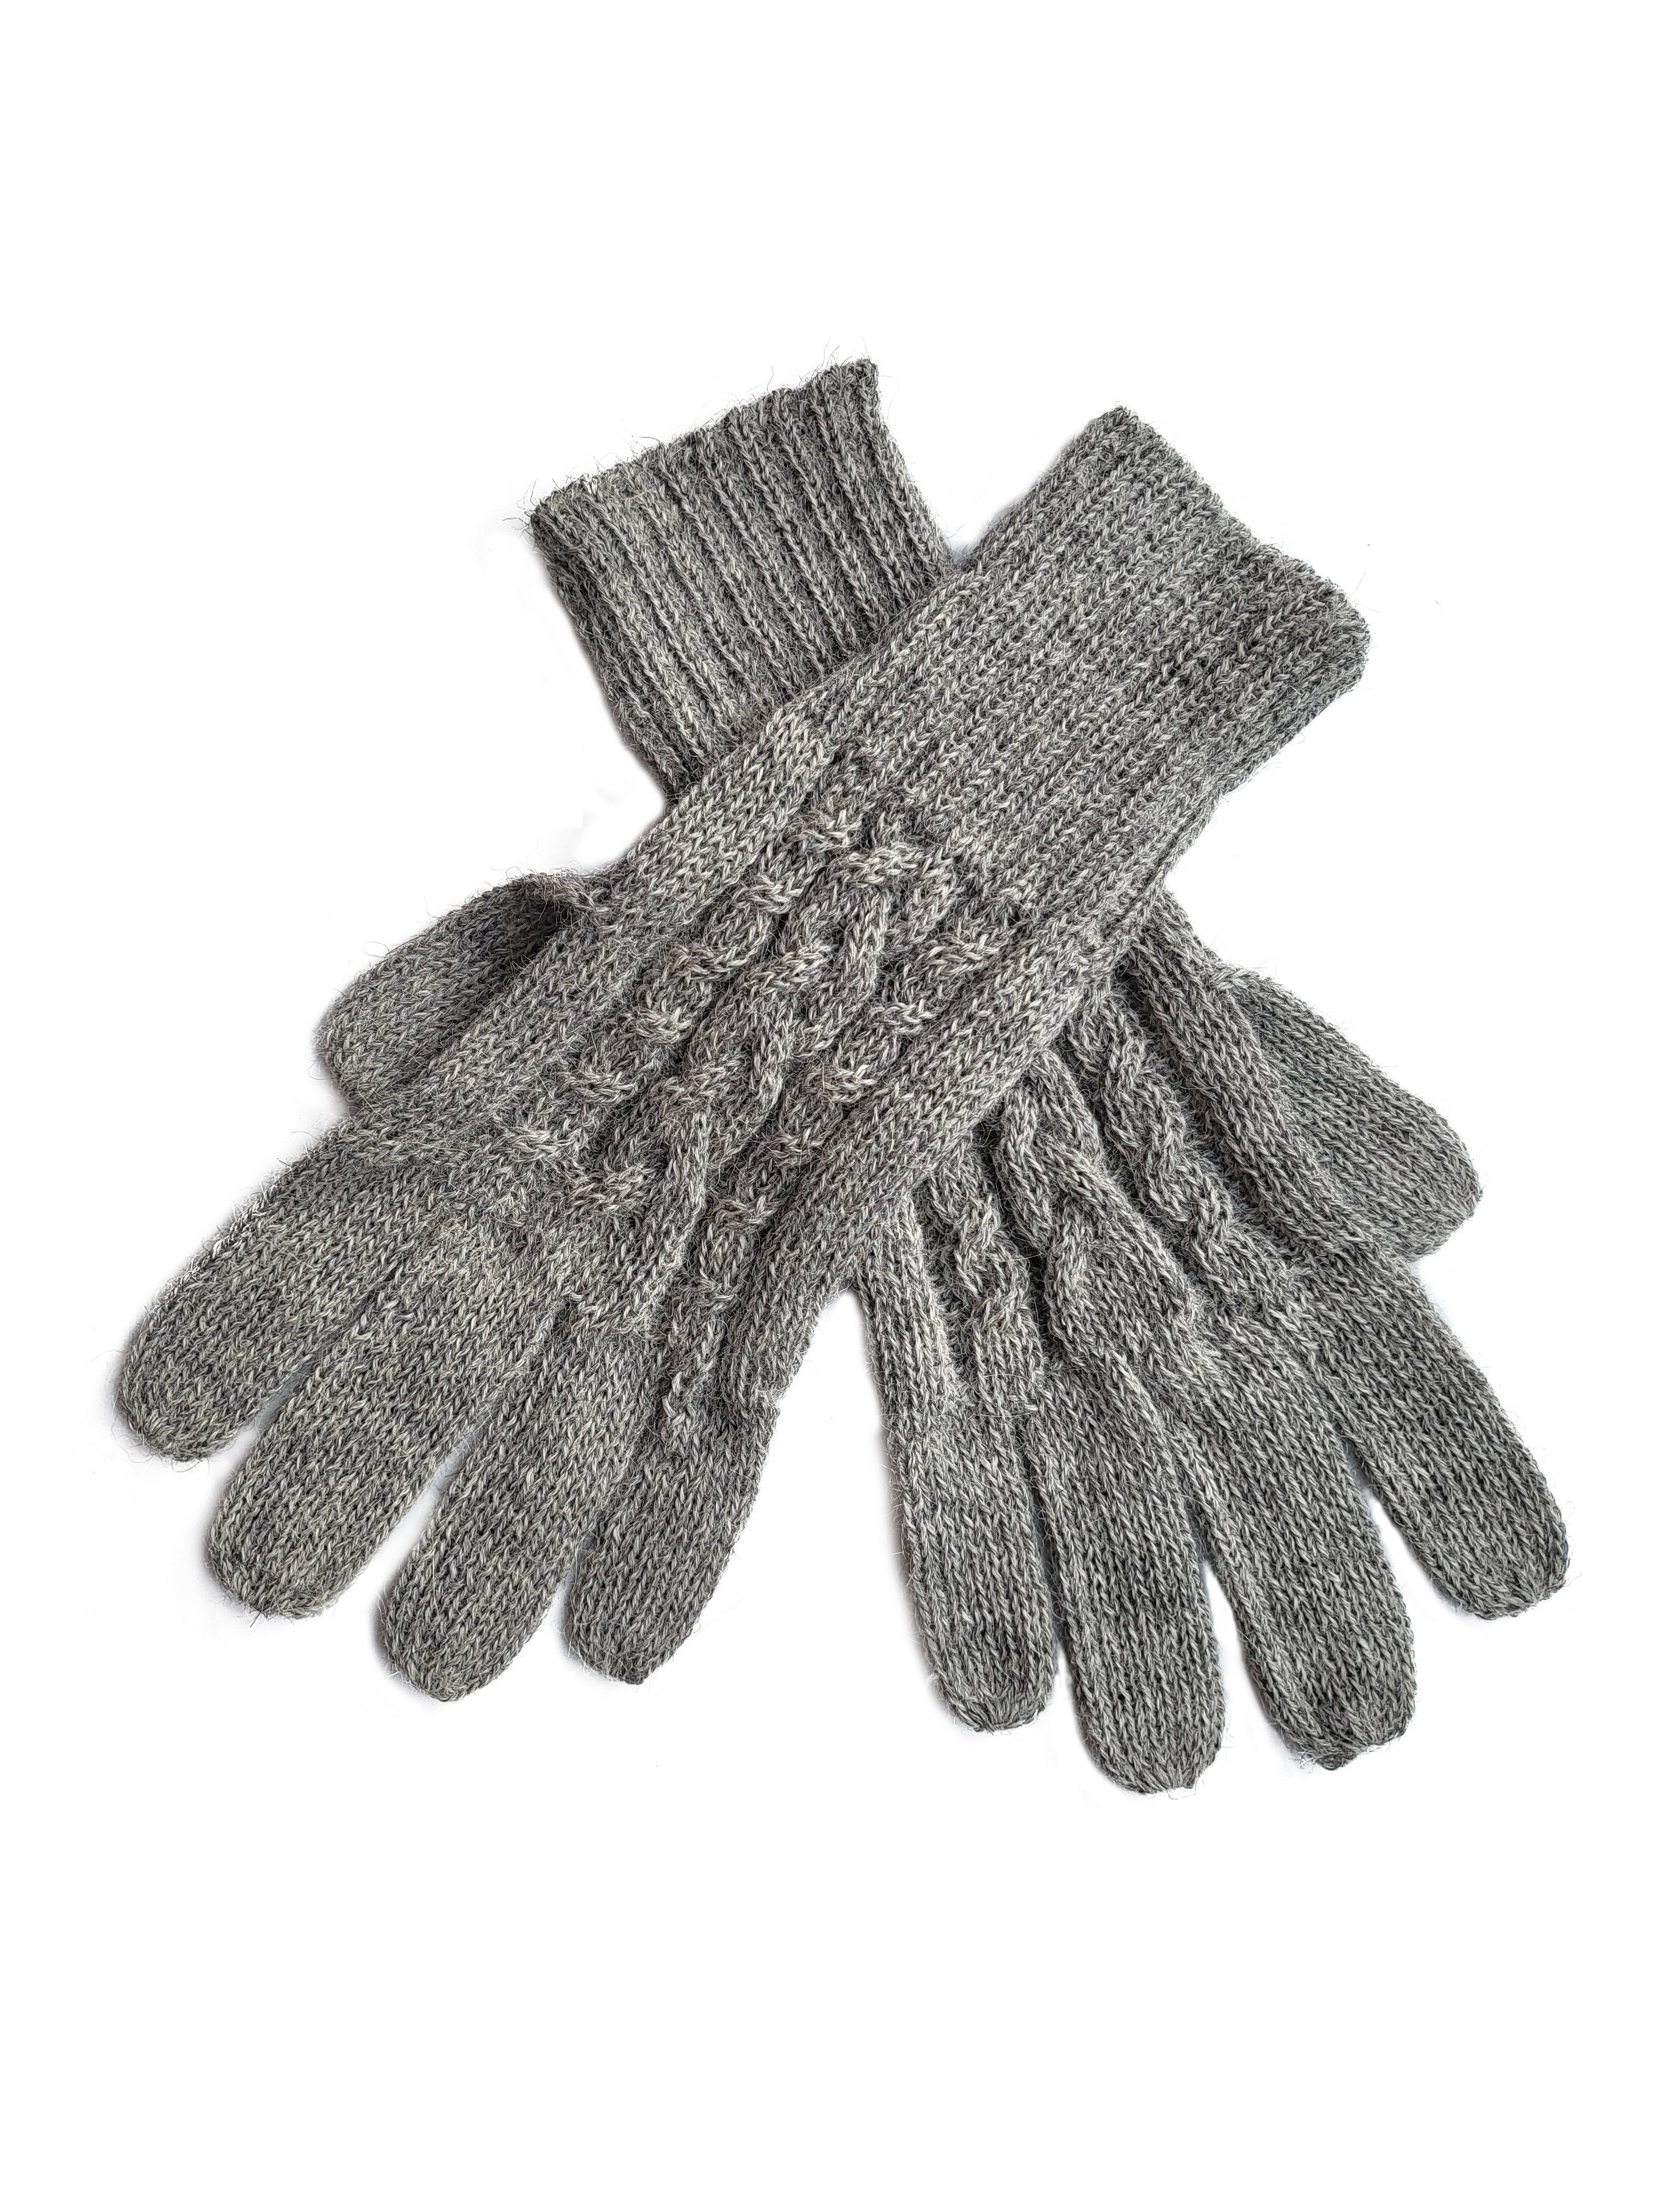 Posh Gear Alpakawolle grau hell Fingerhandschuhe aus 100% Guantibrada Strickhandschuhe Alpaka